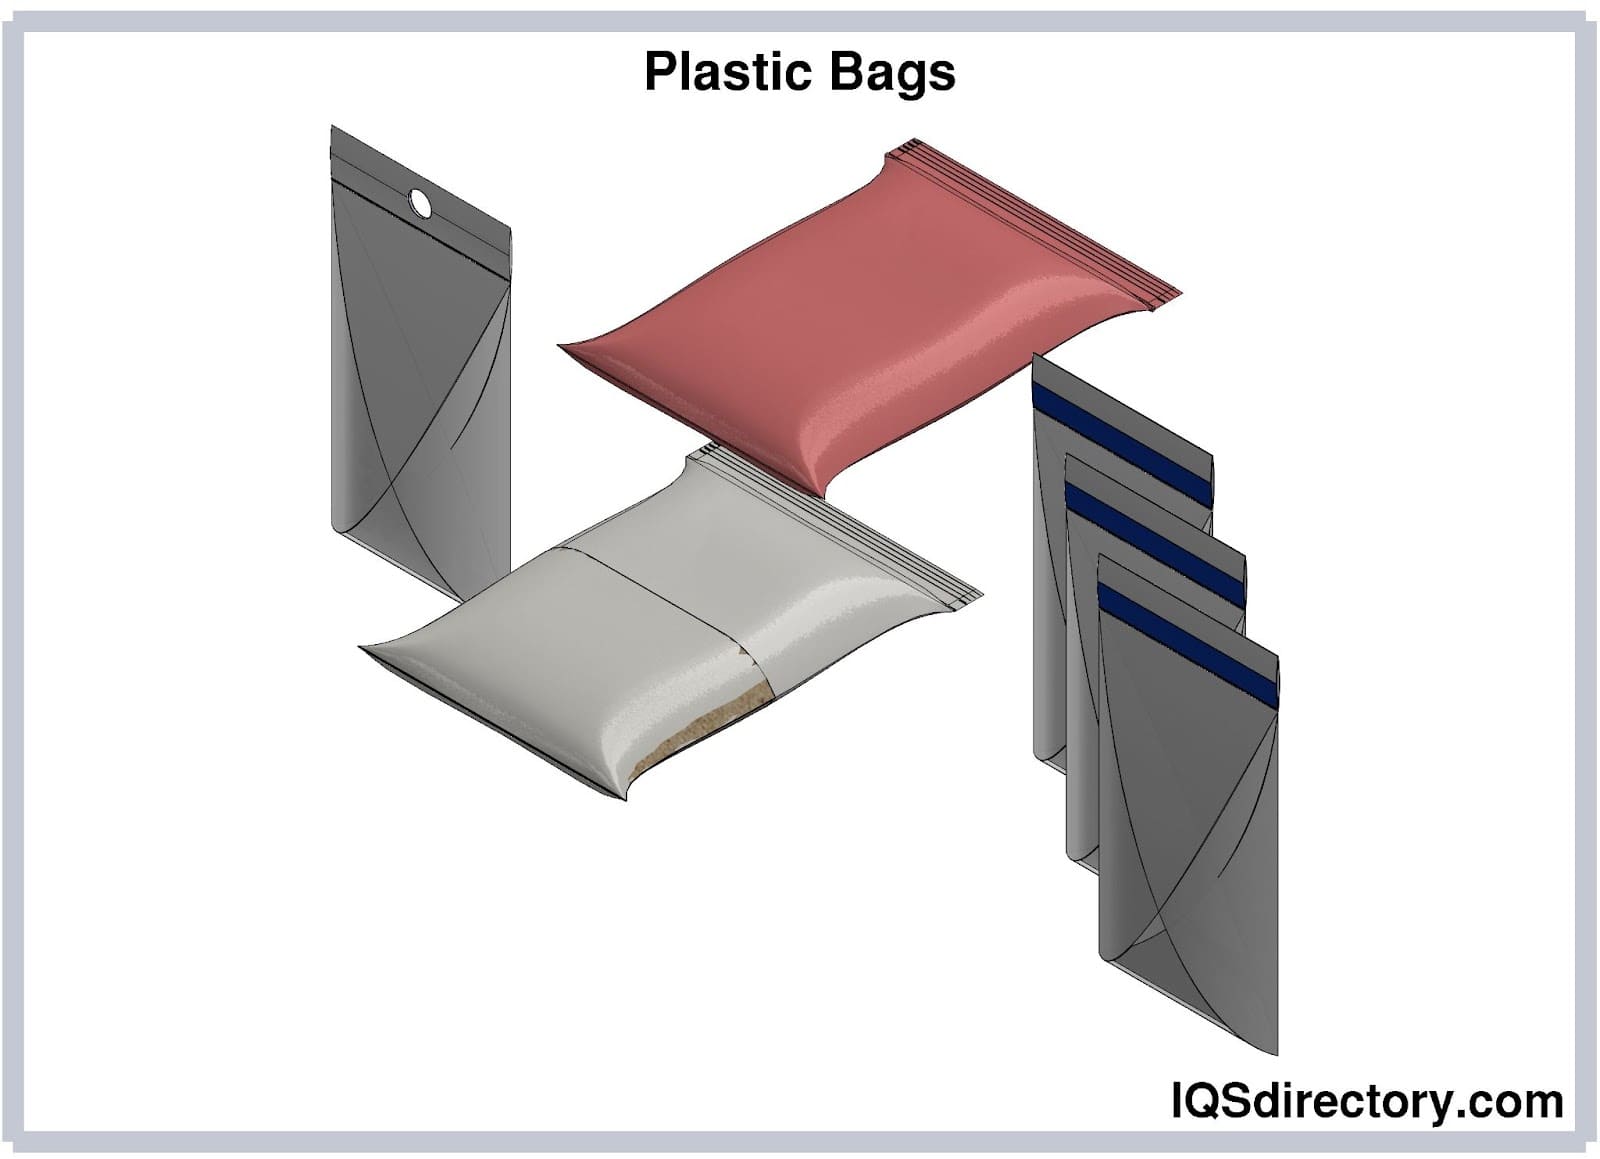 https://www.iqsdirectory.com/articles/plastic-bag/plastic-baggies/plastic-bags.jpg